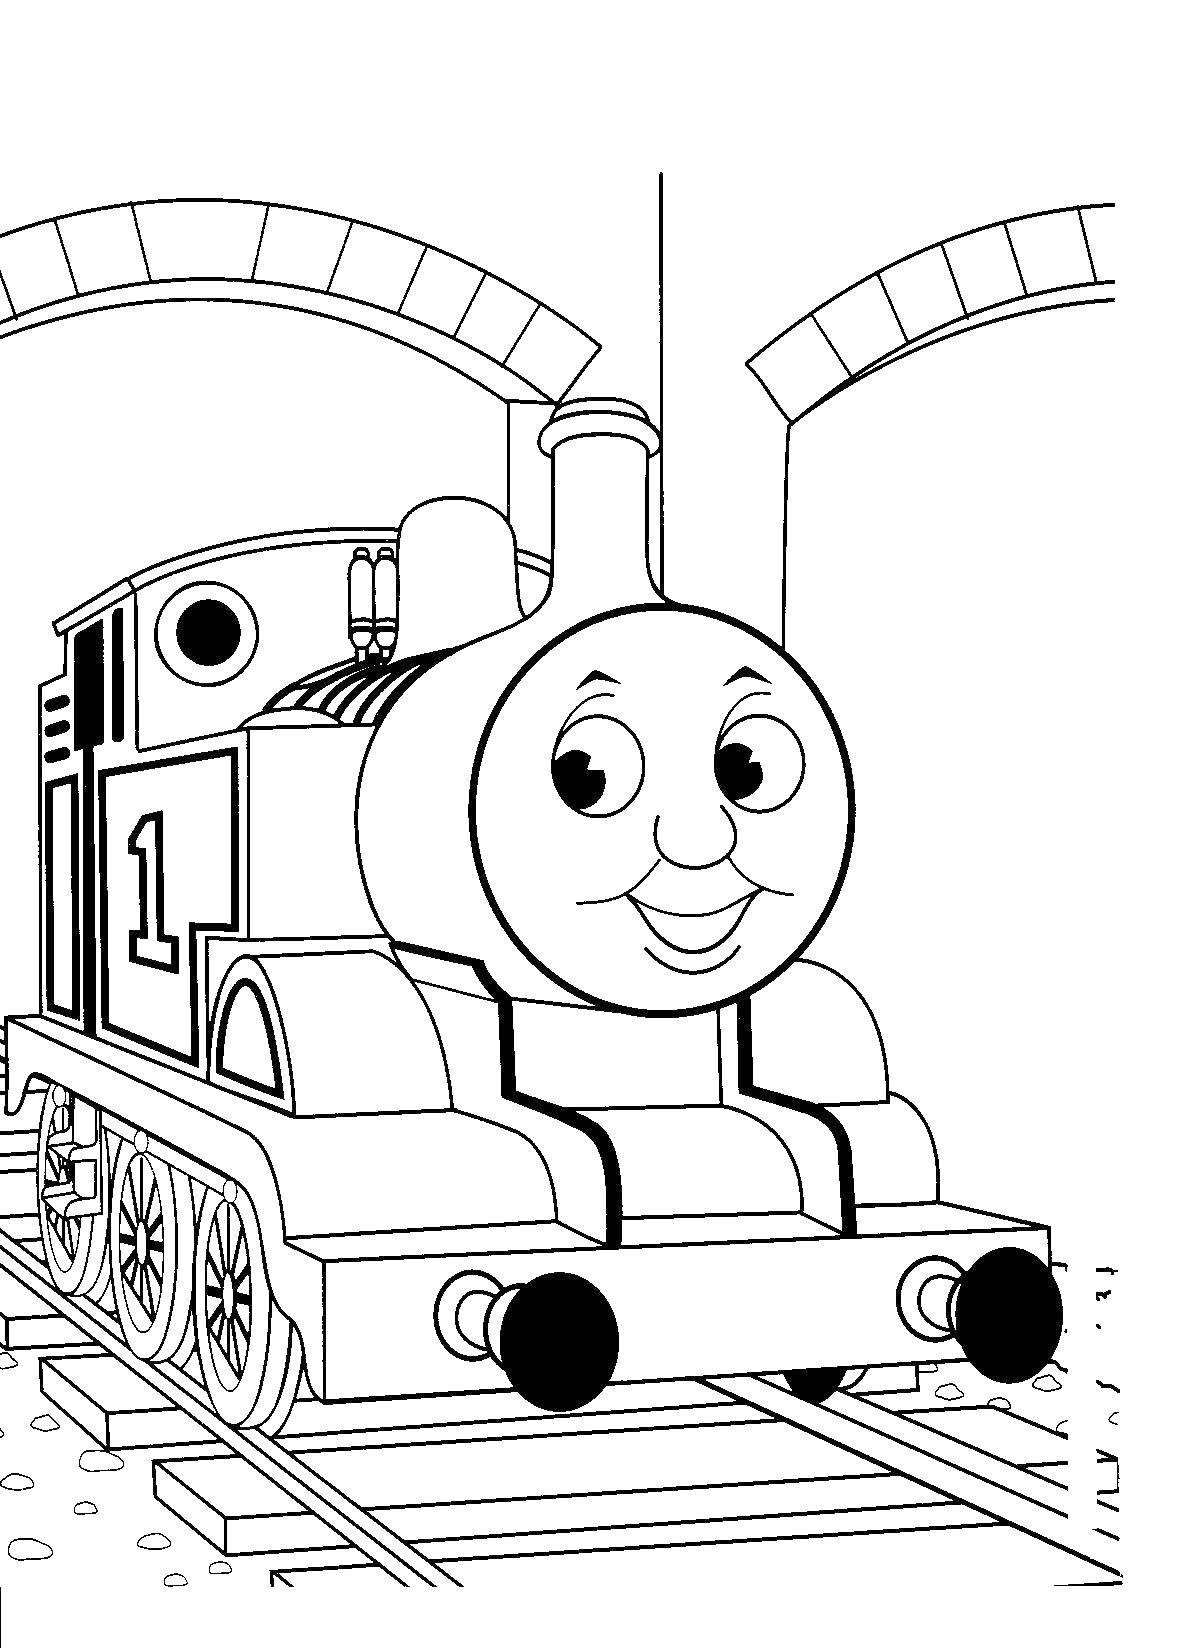 Название: Раскраска Томас паровозик. Категория: мультики. Теги: мультики, Томас, паровоз.